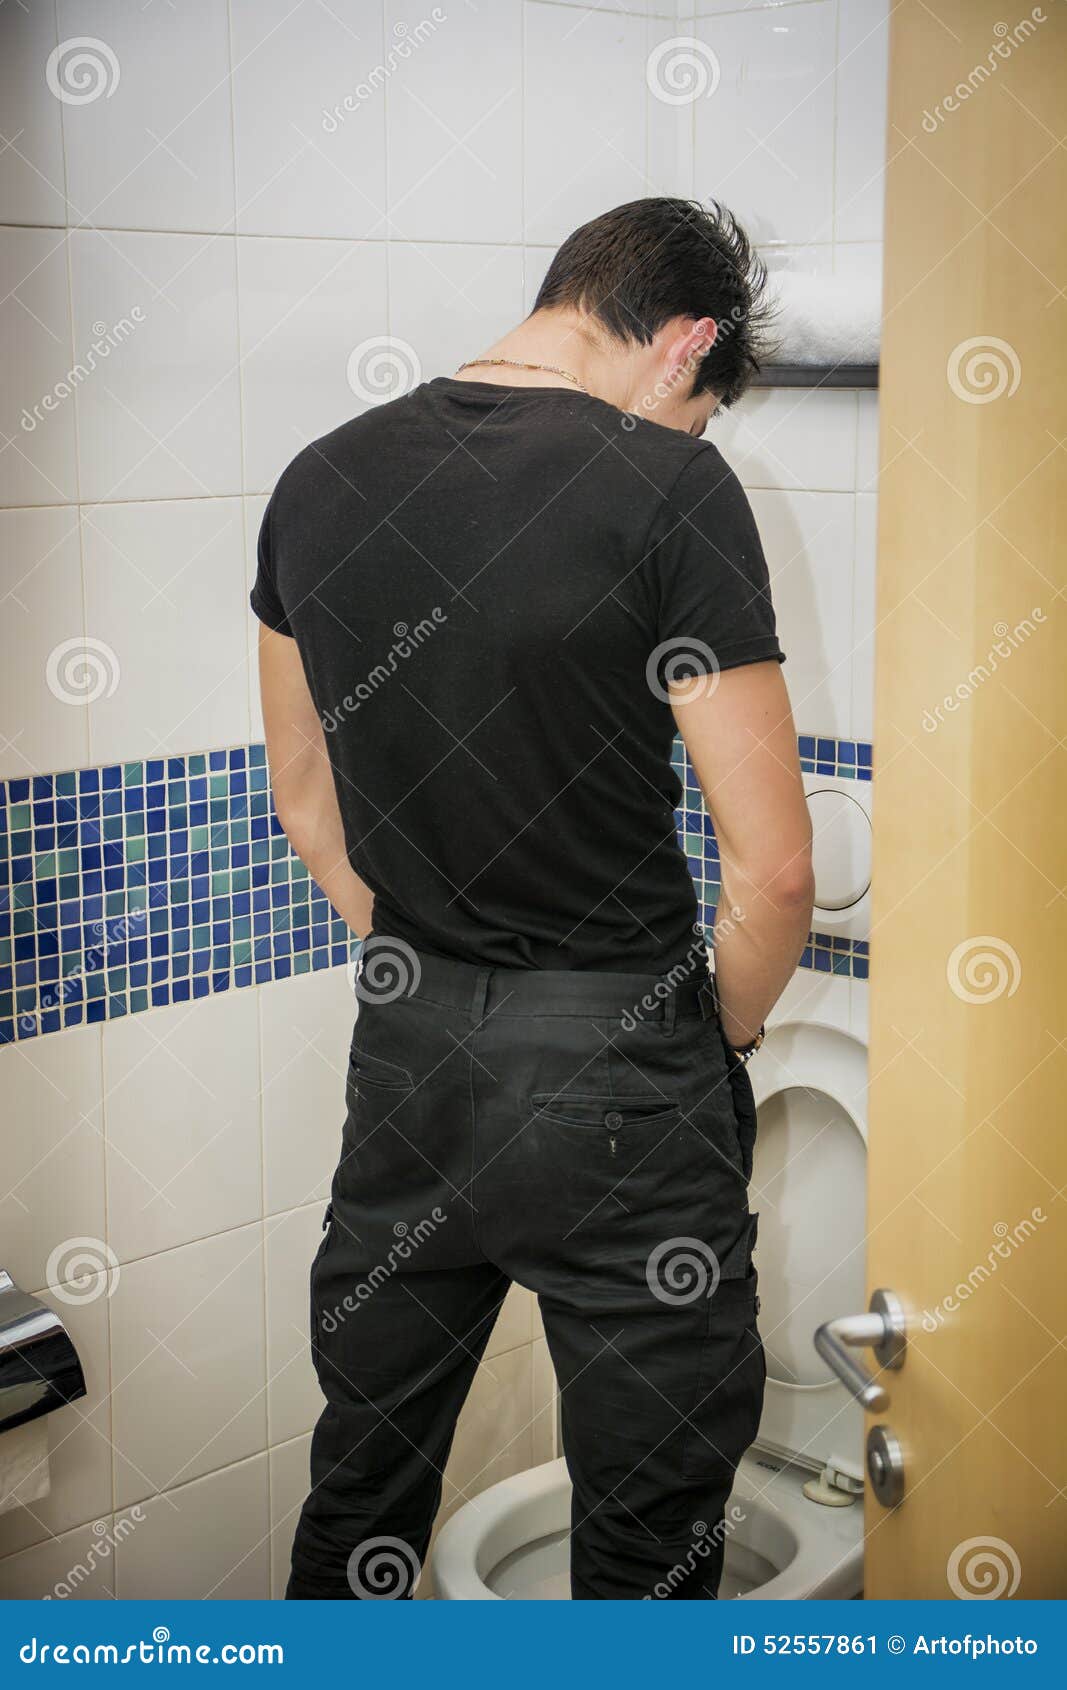 old men peeing in the toilet